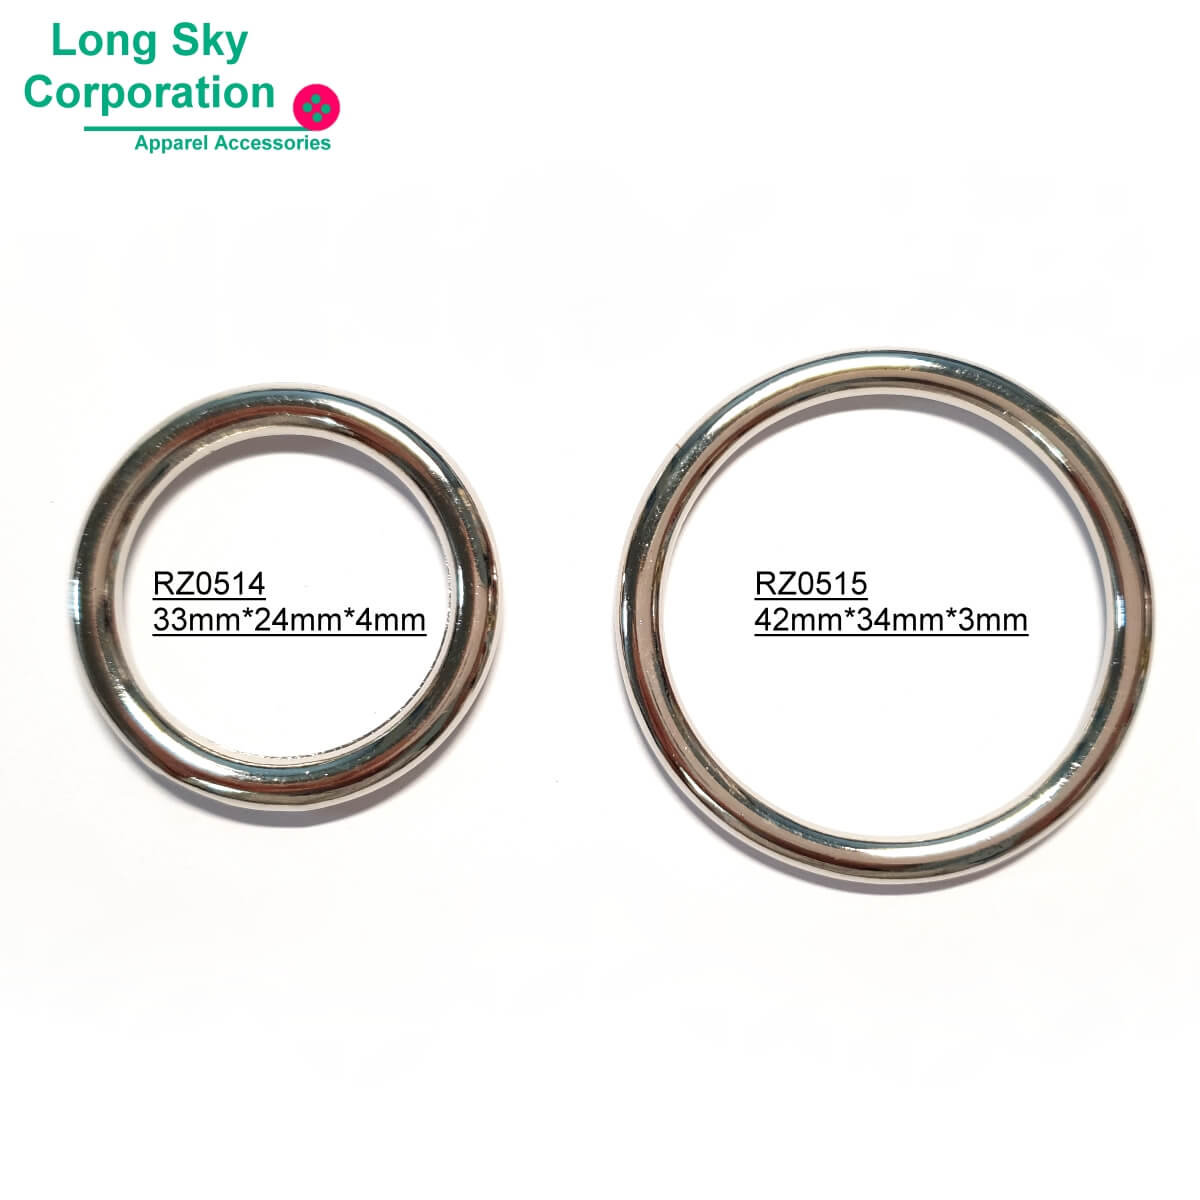 (RZ0515) 34mm inner metal round ring apparel strap dectoration